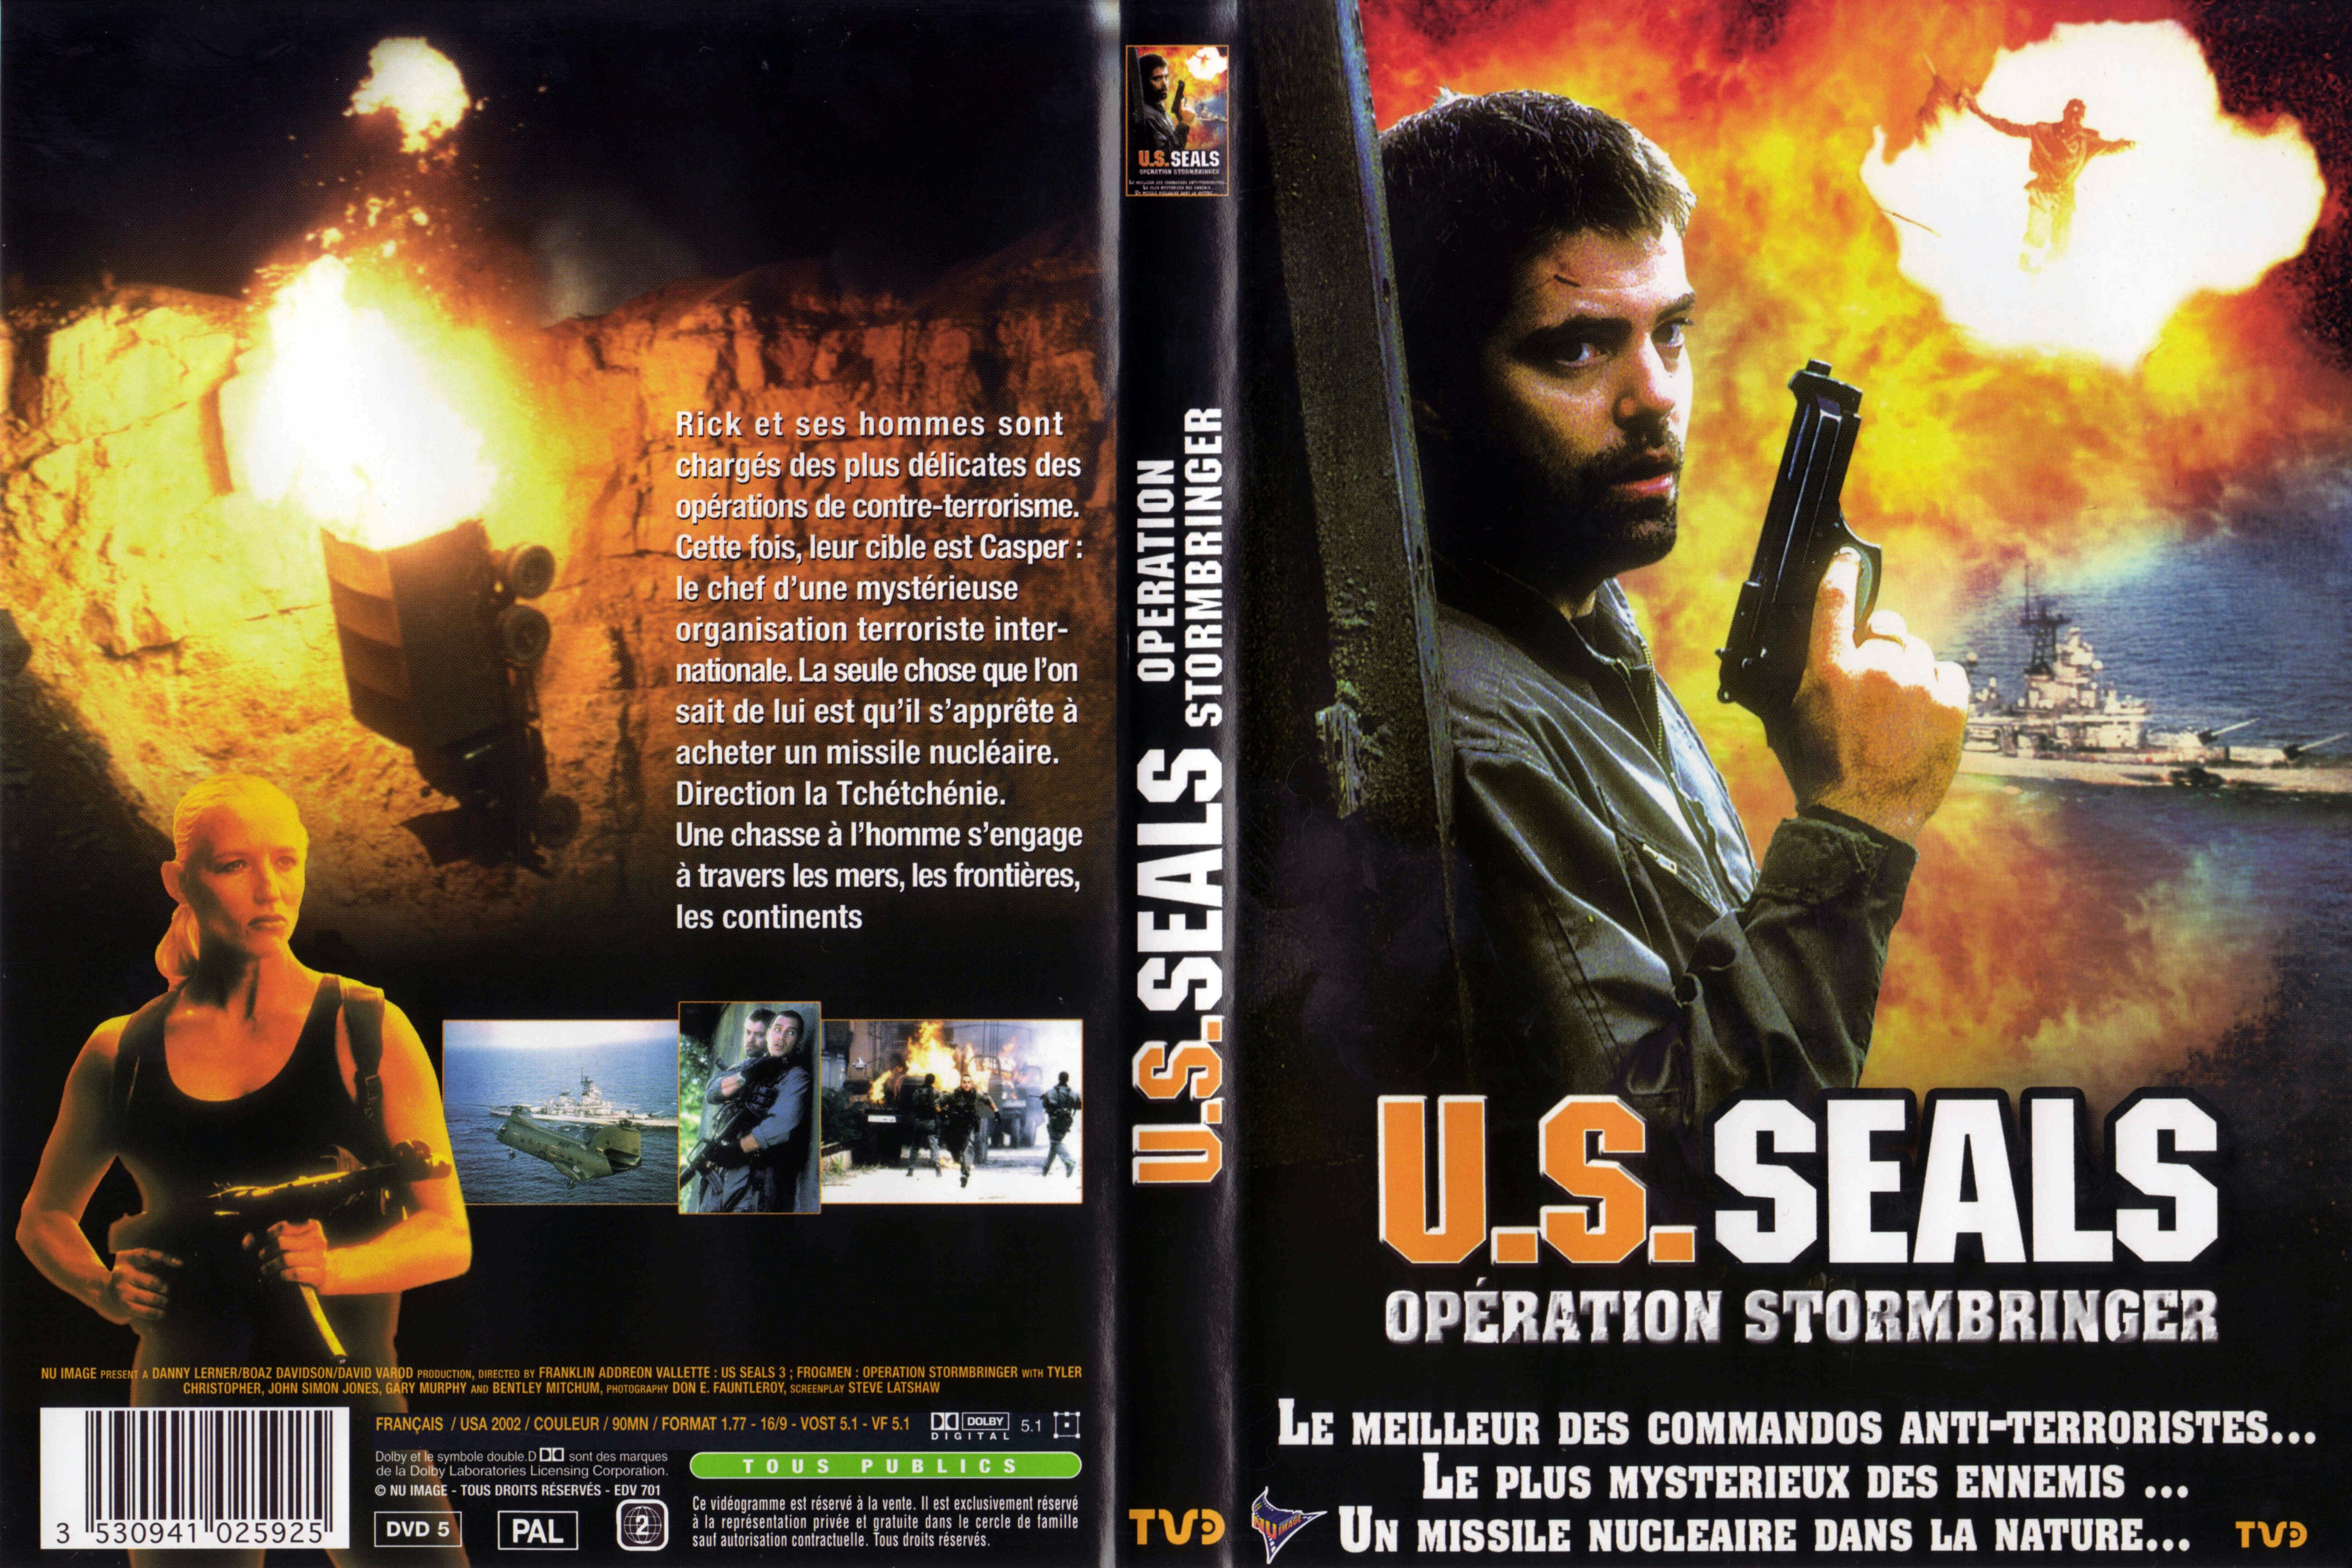 Jaquette DVD US Seals operation stormbringer